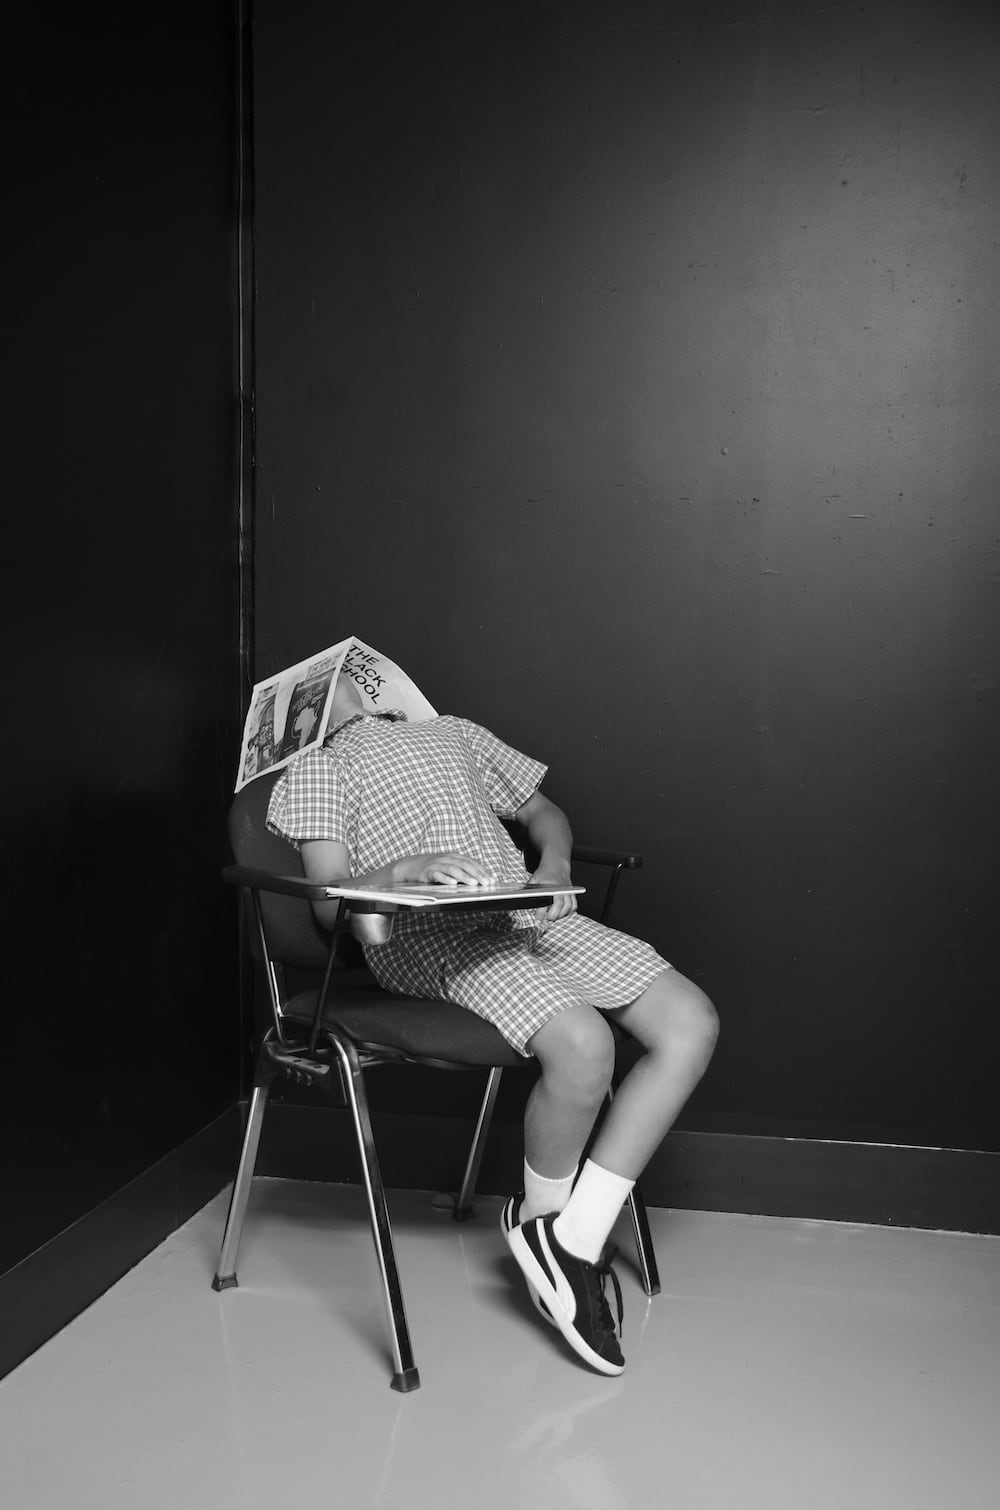 Torika Bolatagici, 'Seeking Comfort in an Uncomfortable Chair (after Munari)' (2019), archival digital print on Platine Fibre Rag, 110 x 73 cm (unframed). Image courtesy the artist.